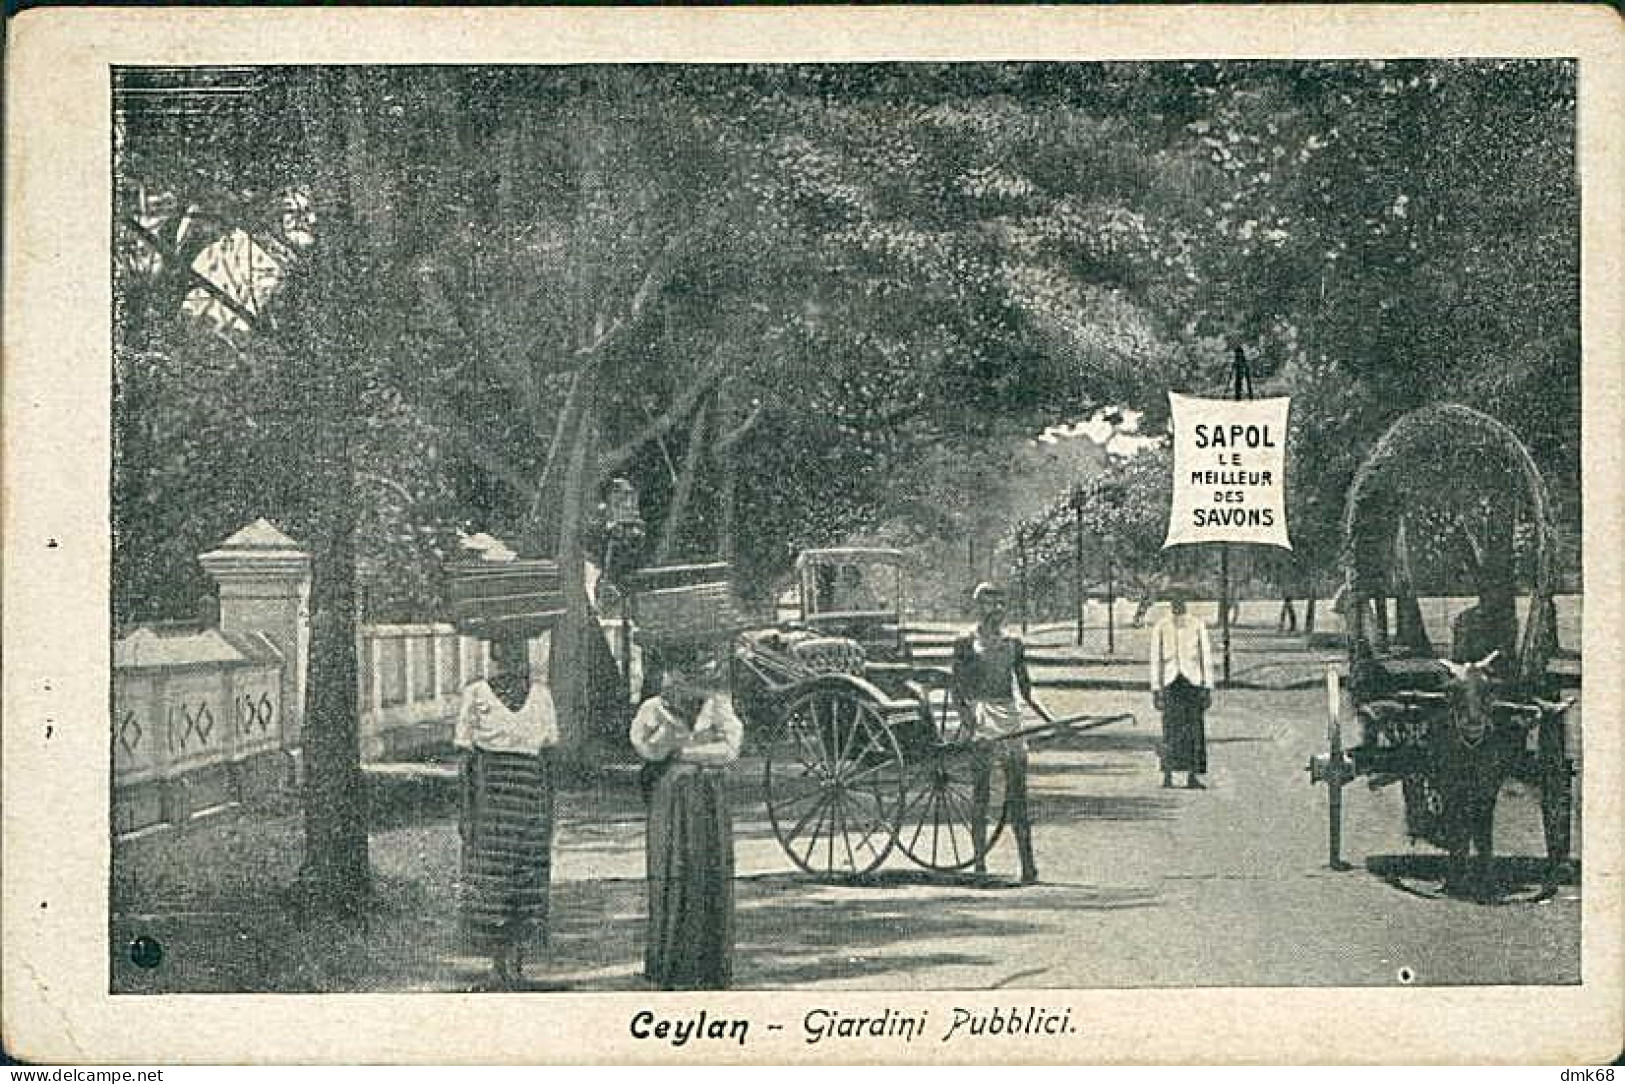 SRI LANKA / CEYLON - PUBLIC GARDENS - ADVERTISING POSTCARD SAPOL LES MEILLEUS DES SAVONS - ITALIAN EDITION 1900s (18346) - Sri Lanka (Ceylon)